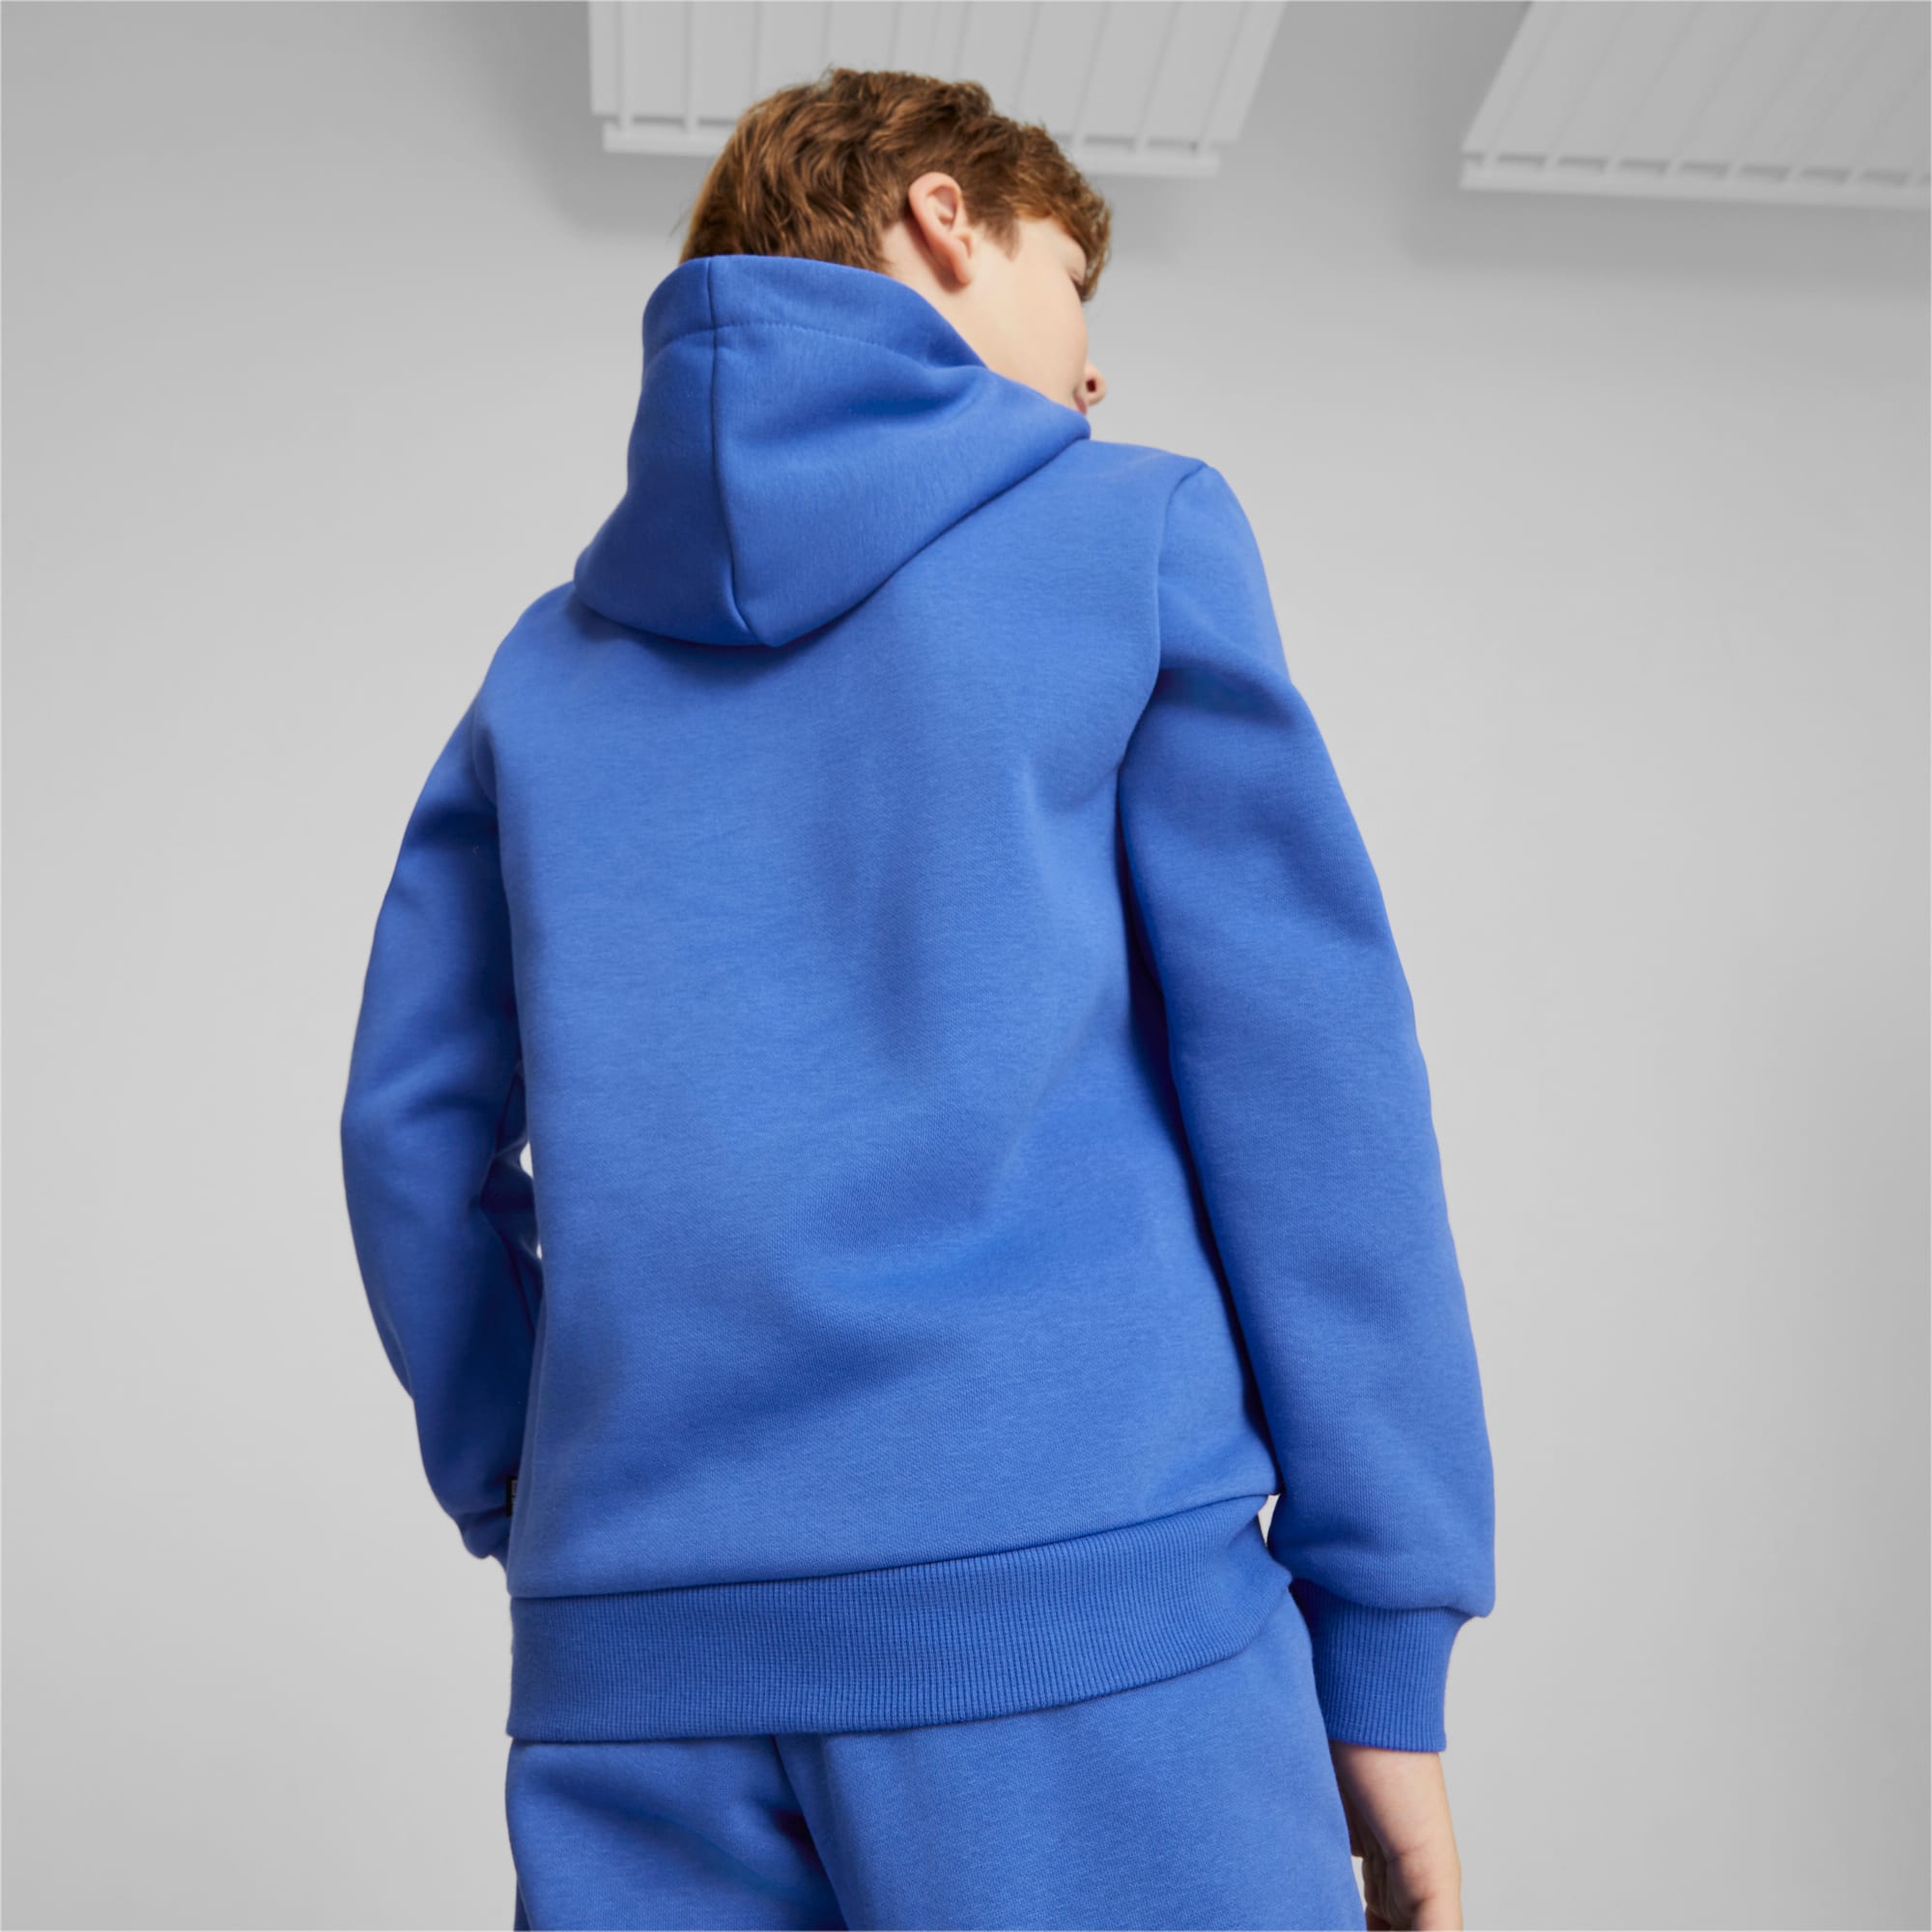 PUMA Essentials+ Two-Tone Big Logo Youth Hoodie, Royal Blue, Size 92, Clothing